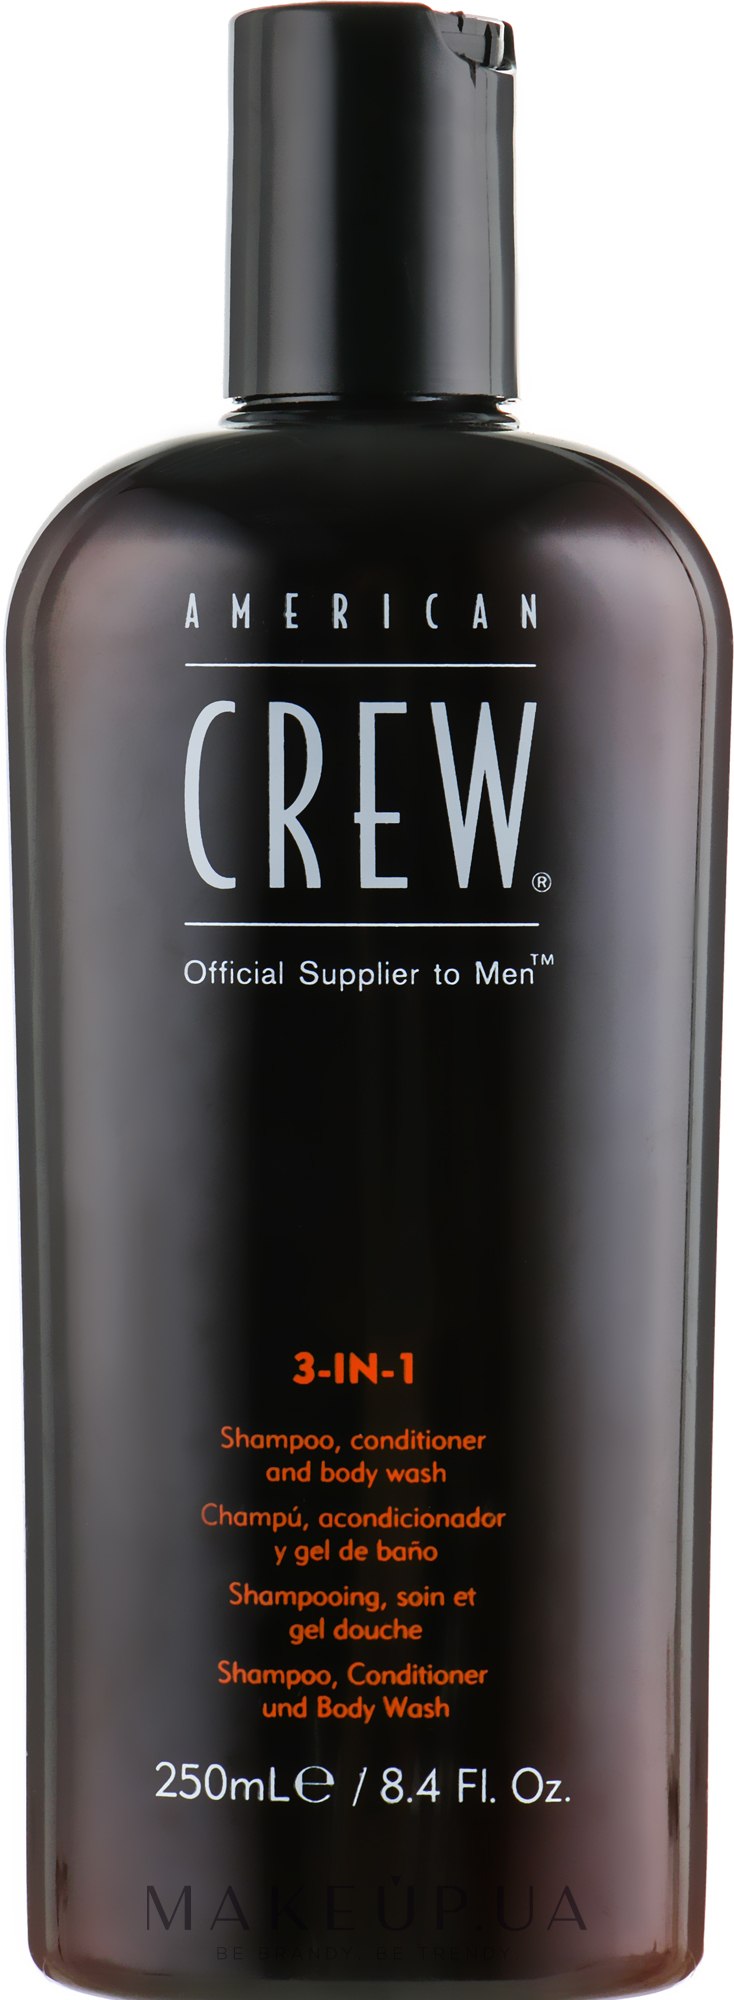 Средство 3-в-1 по уходу за волосами и телом - American Crew Classic 3-in-1 Shampoo, Conditioner&Body Wash — фото 250ml